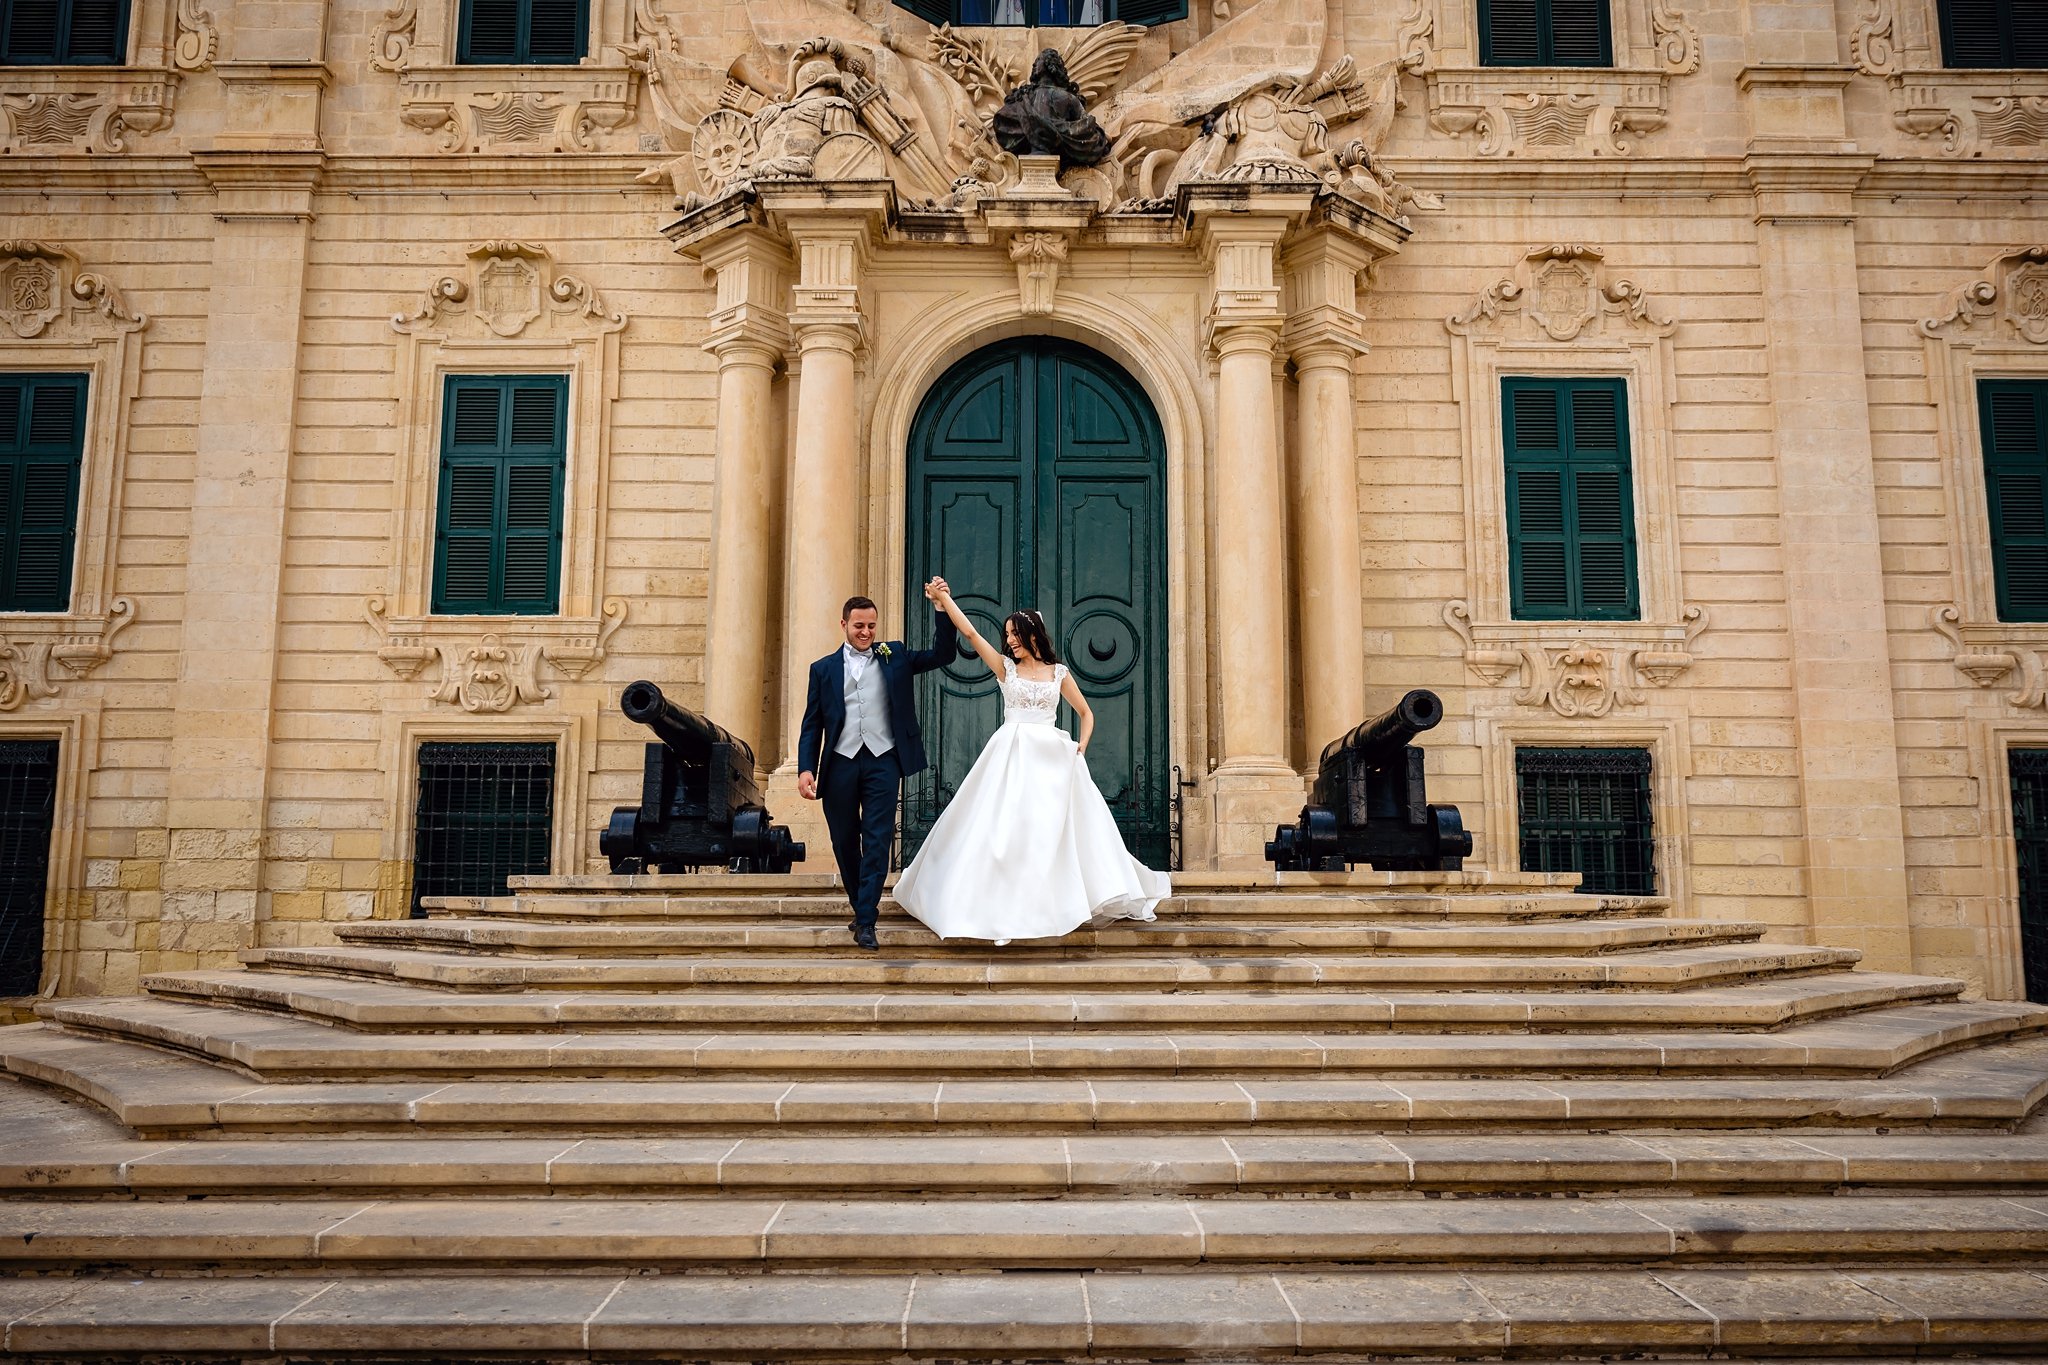 Desiree and Andrei's Wedding at Villa Mdina Naxxar_0042.jpg